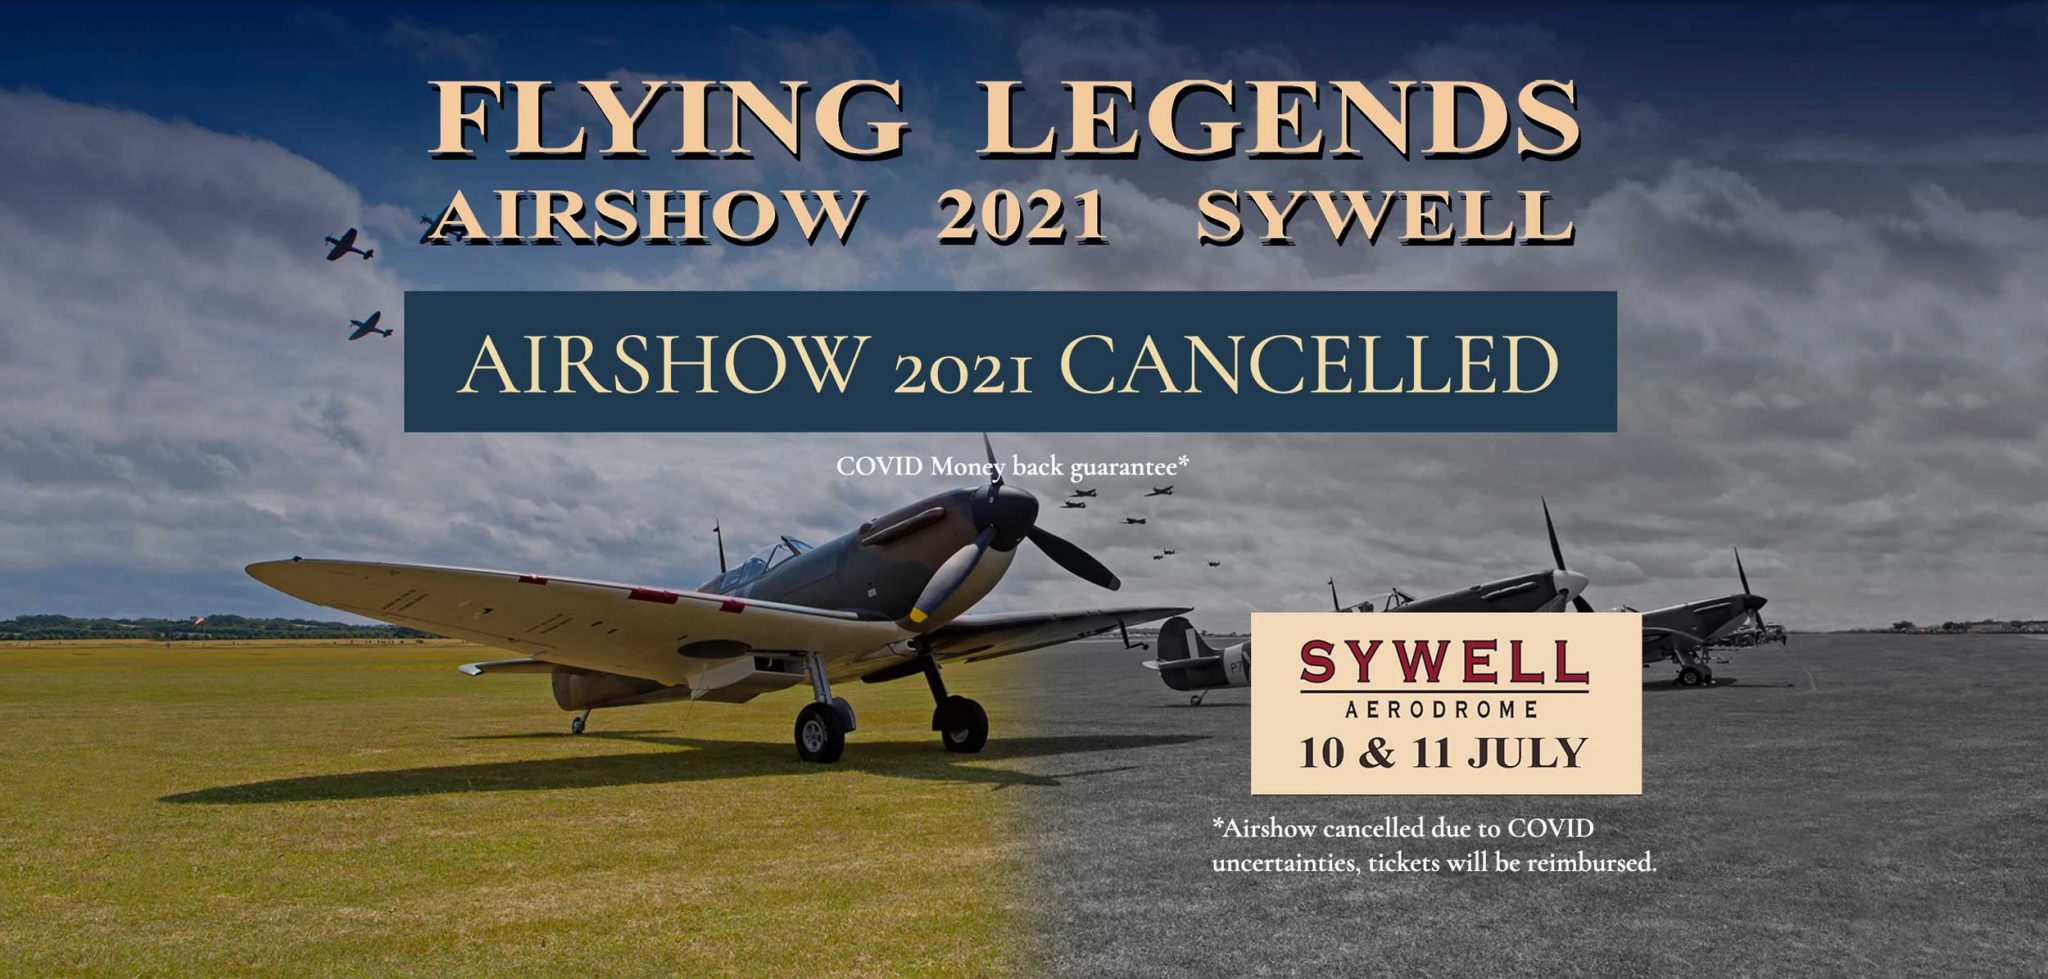 Flying Legends cancels July airshow FLYER